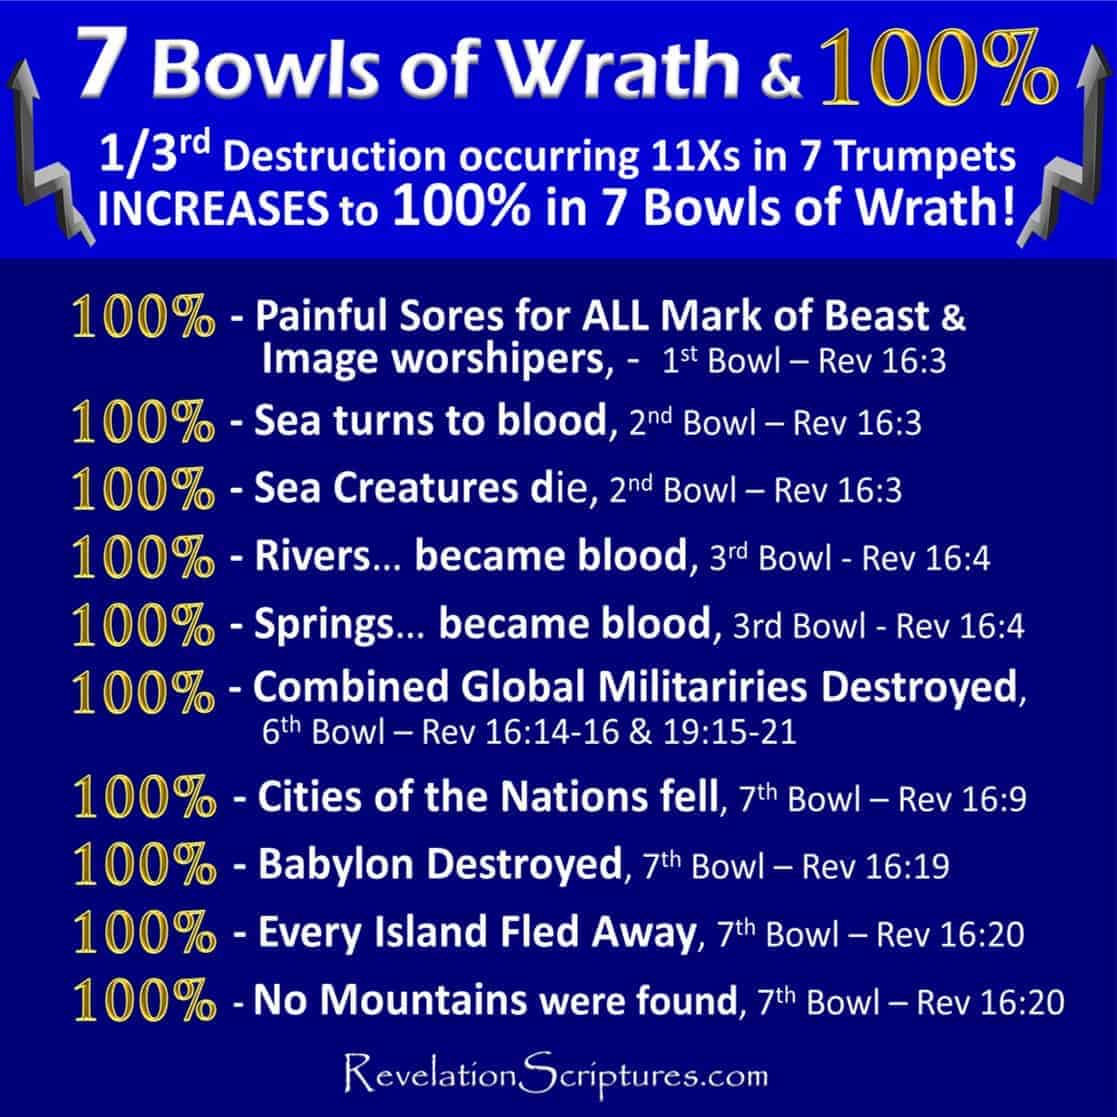 7 Bowls of Wrath